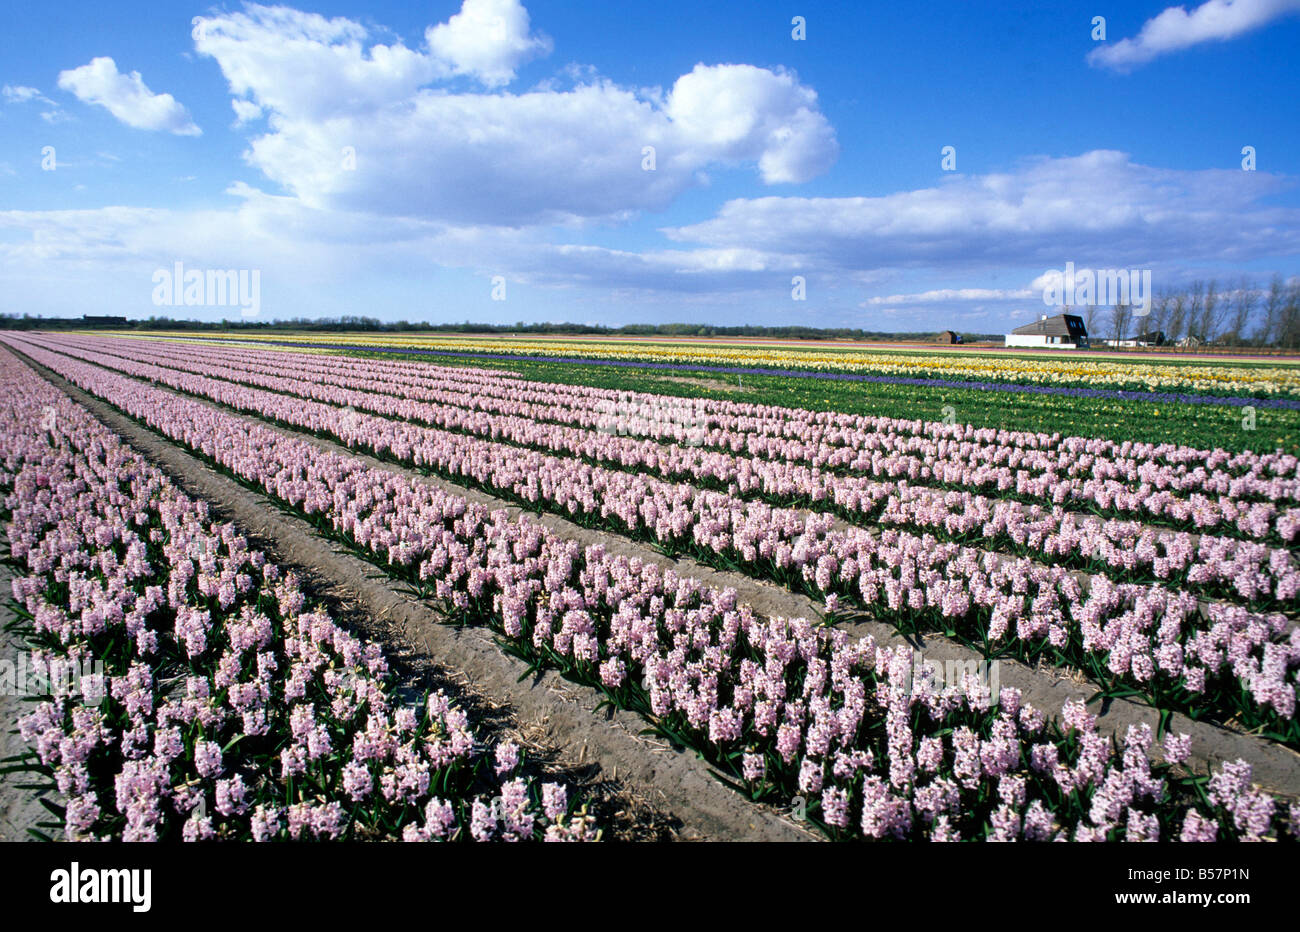 Hyacinth Stock Photo